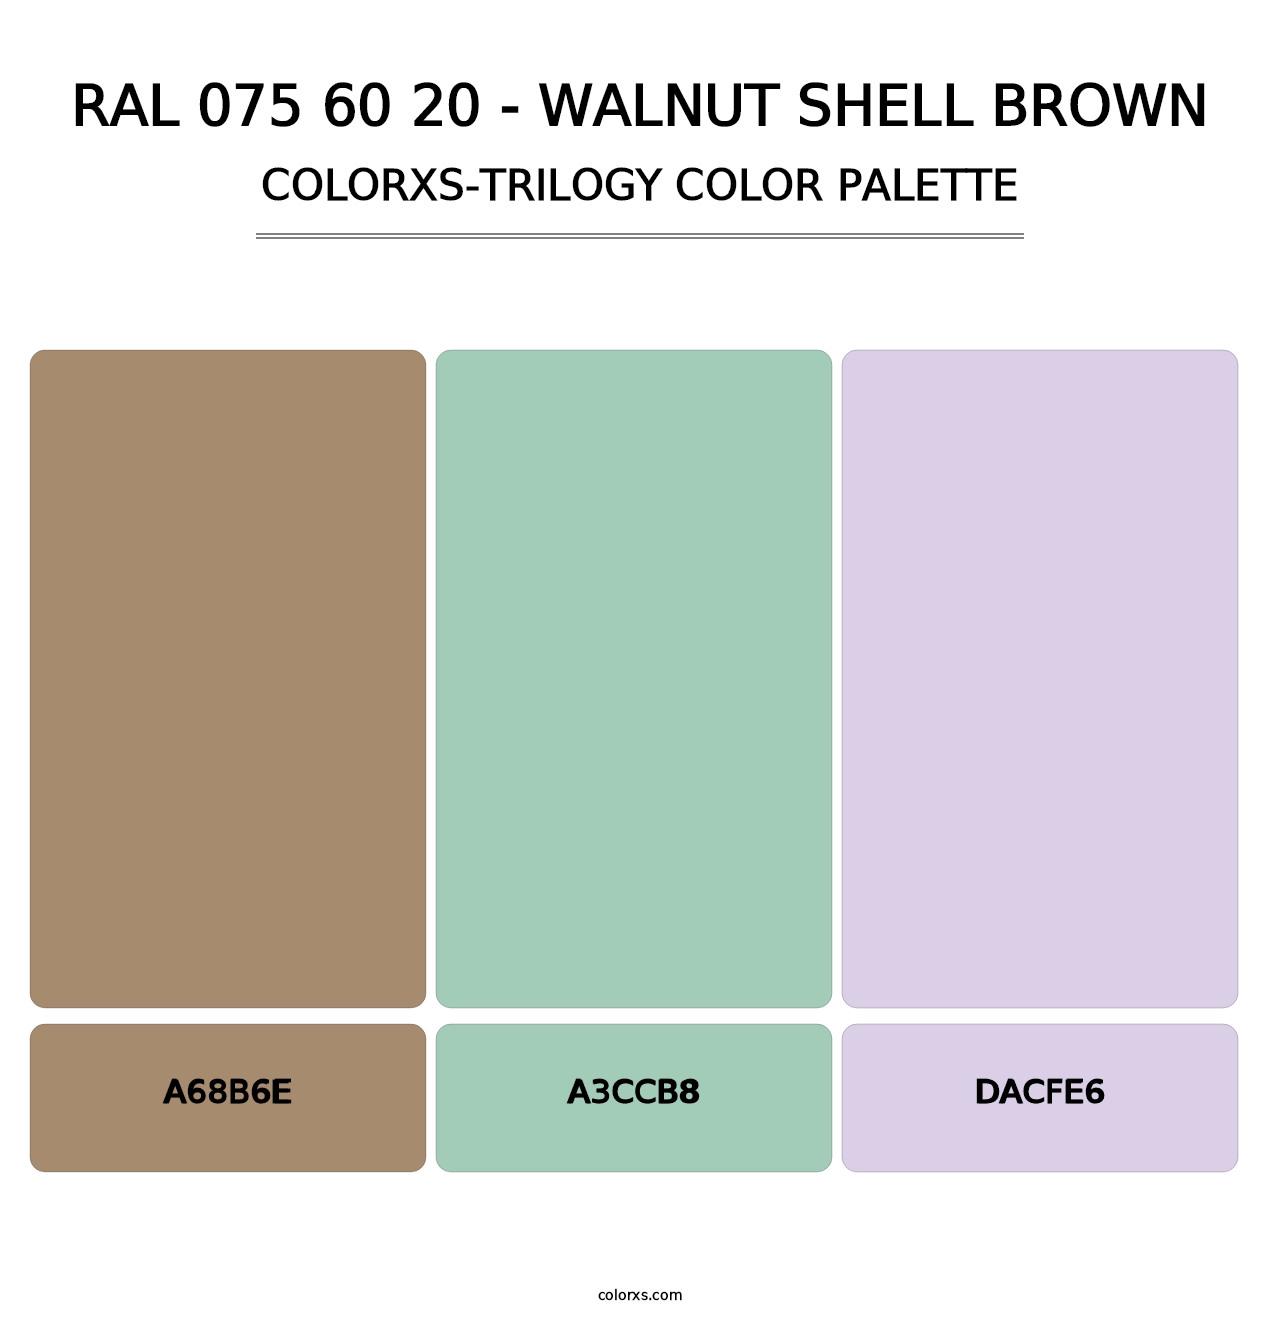 RAL 075 60 20 - Walnut Shell Brown - Colorxs Trilogy Palette